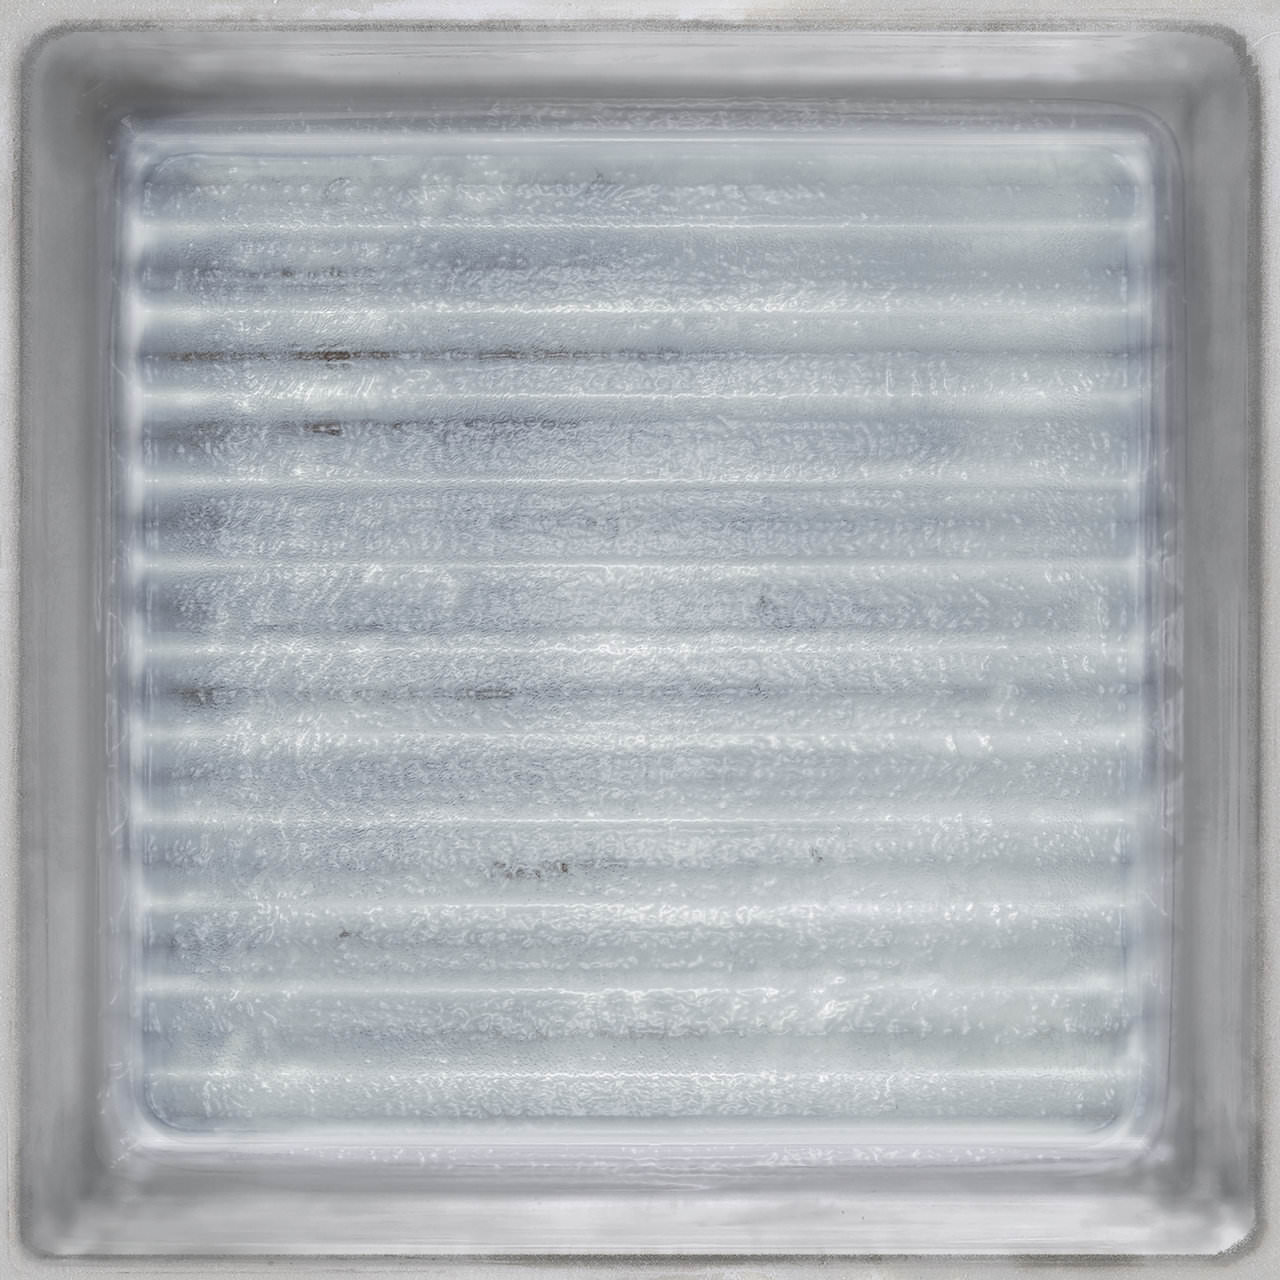 Ir dgb glass azure 2020 f01 563545